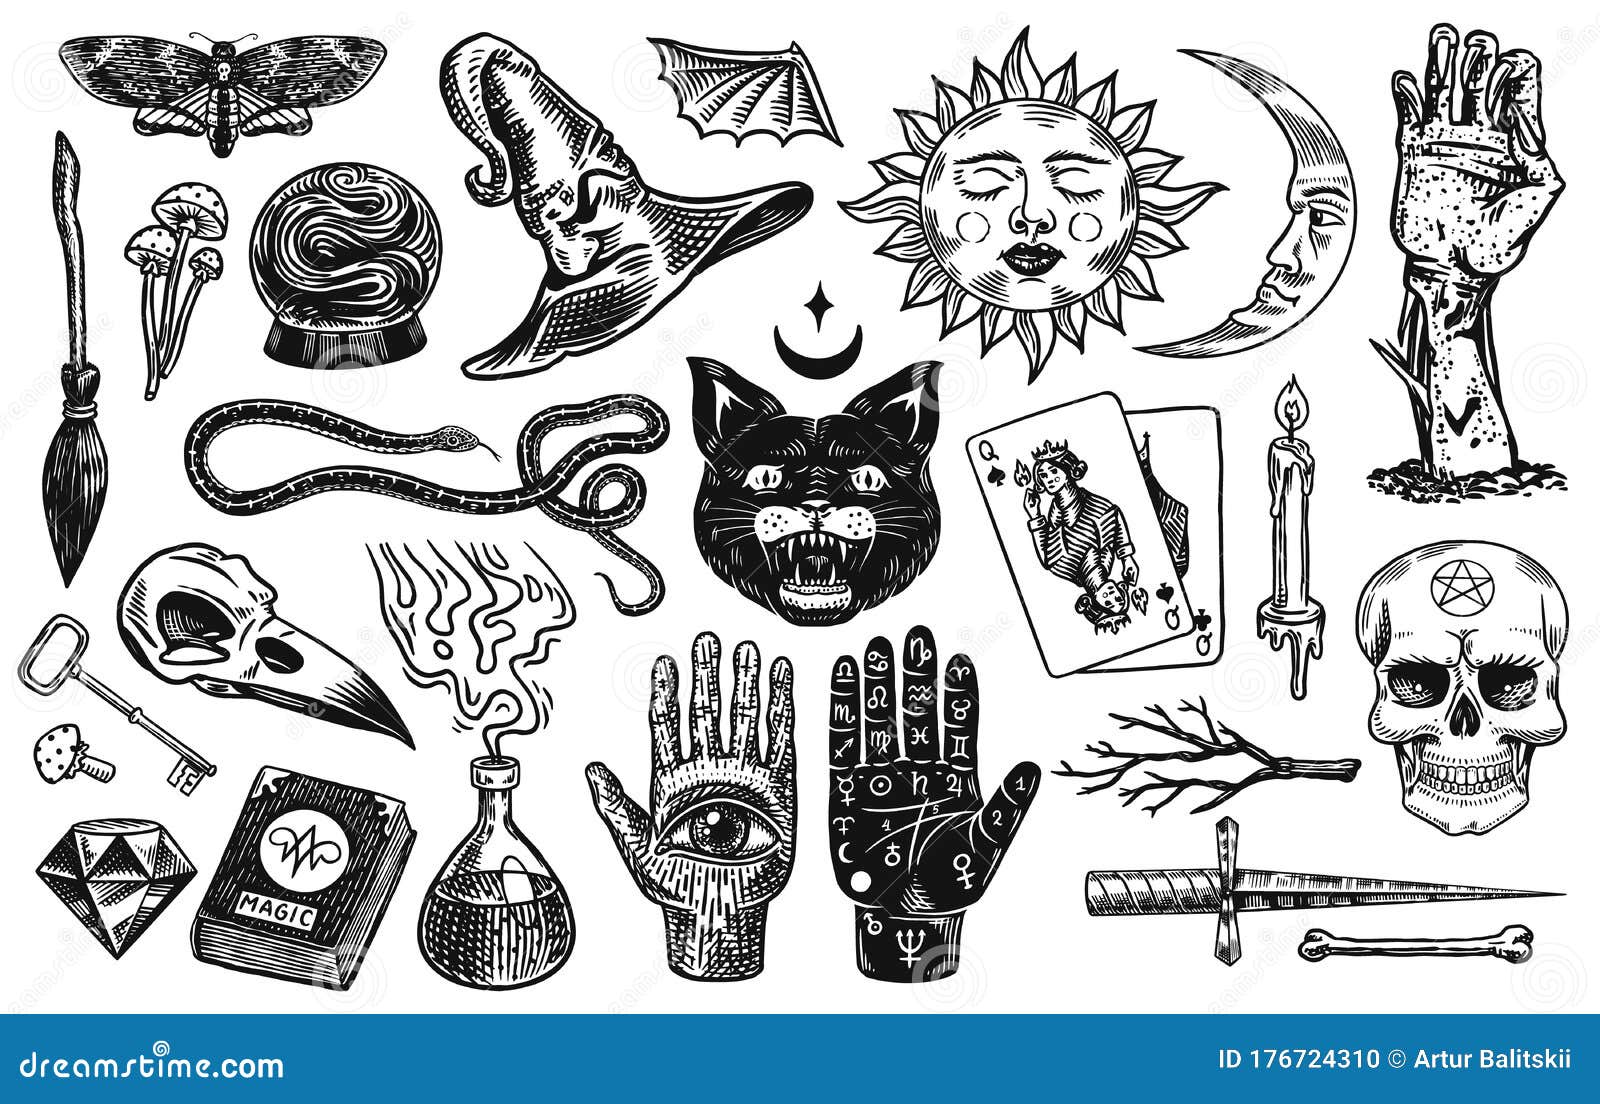 Occult Symbols Tattoos Images  Free Download on Freepik